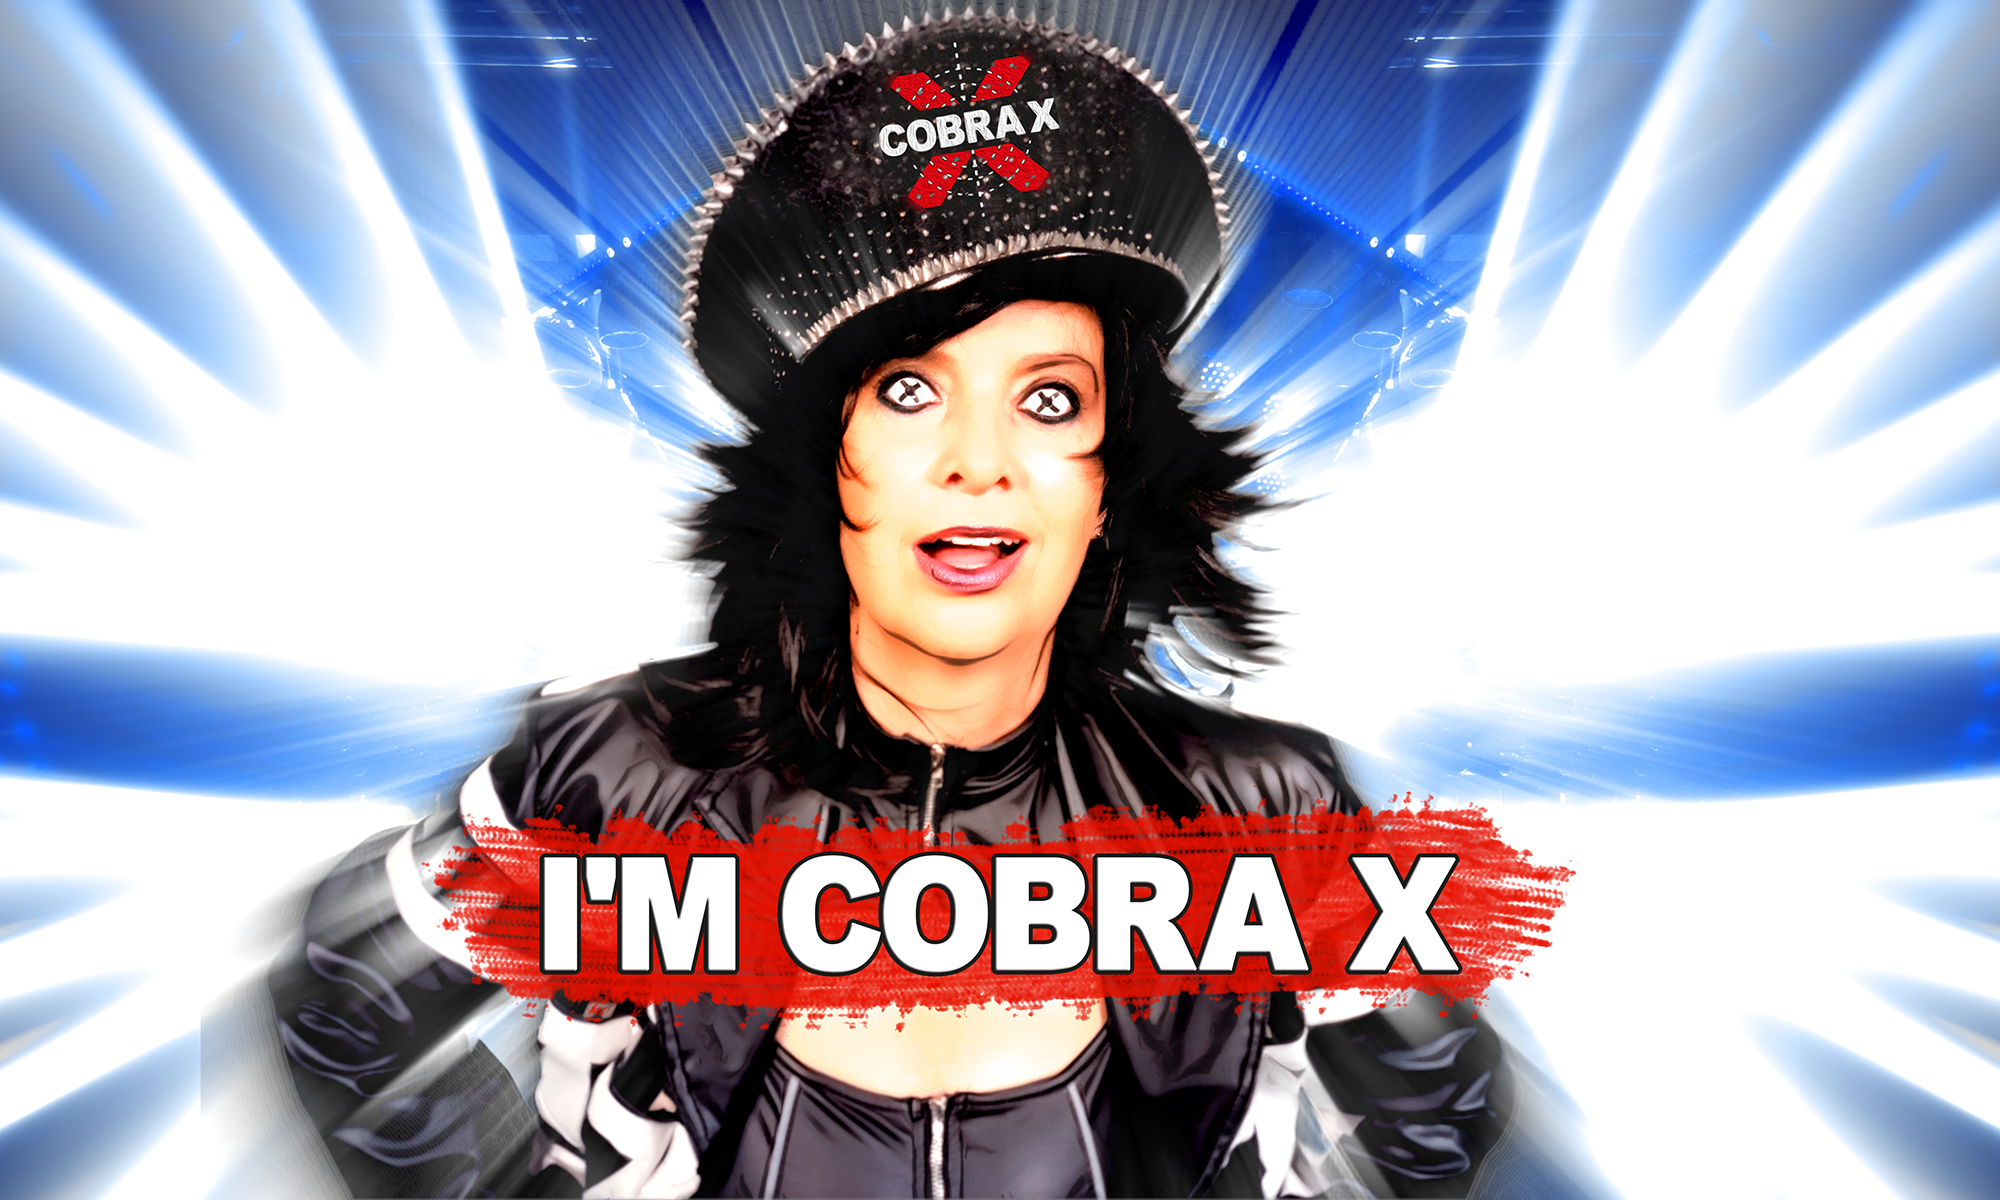 Cobra X - I am Cobra X